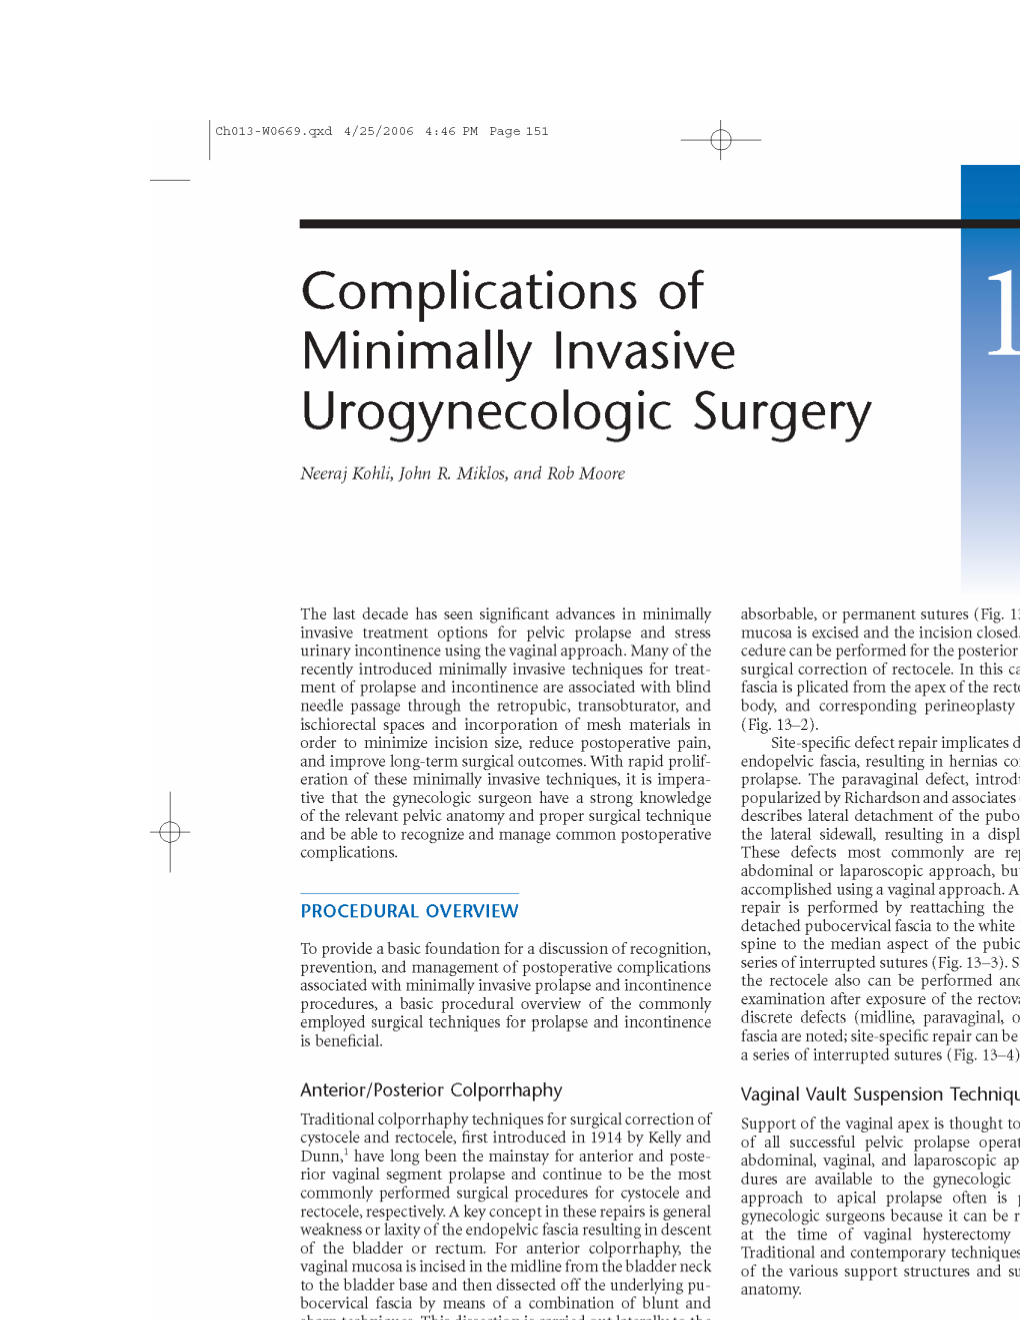 Complications of Minimally Invasive Urogynecologic Surgery